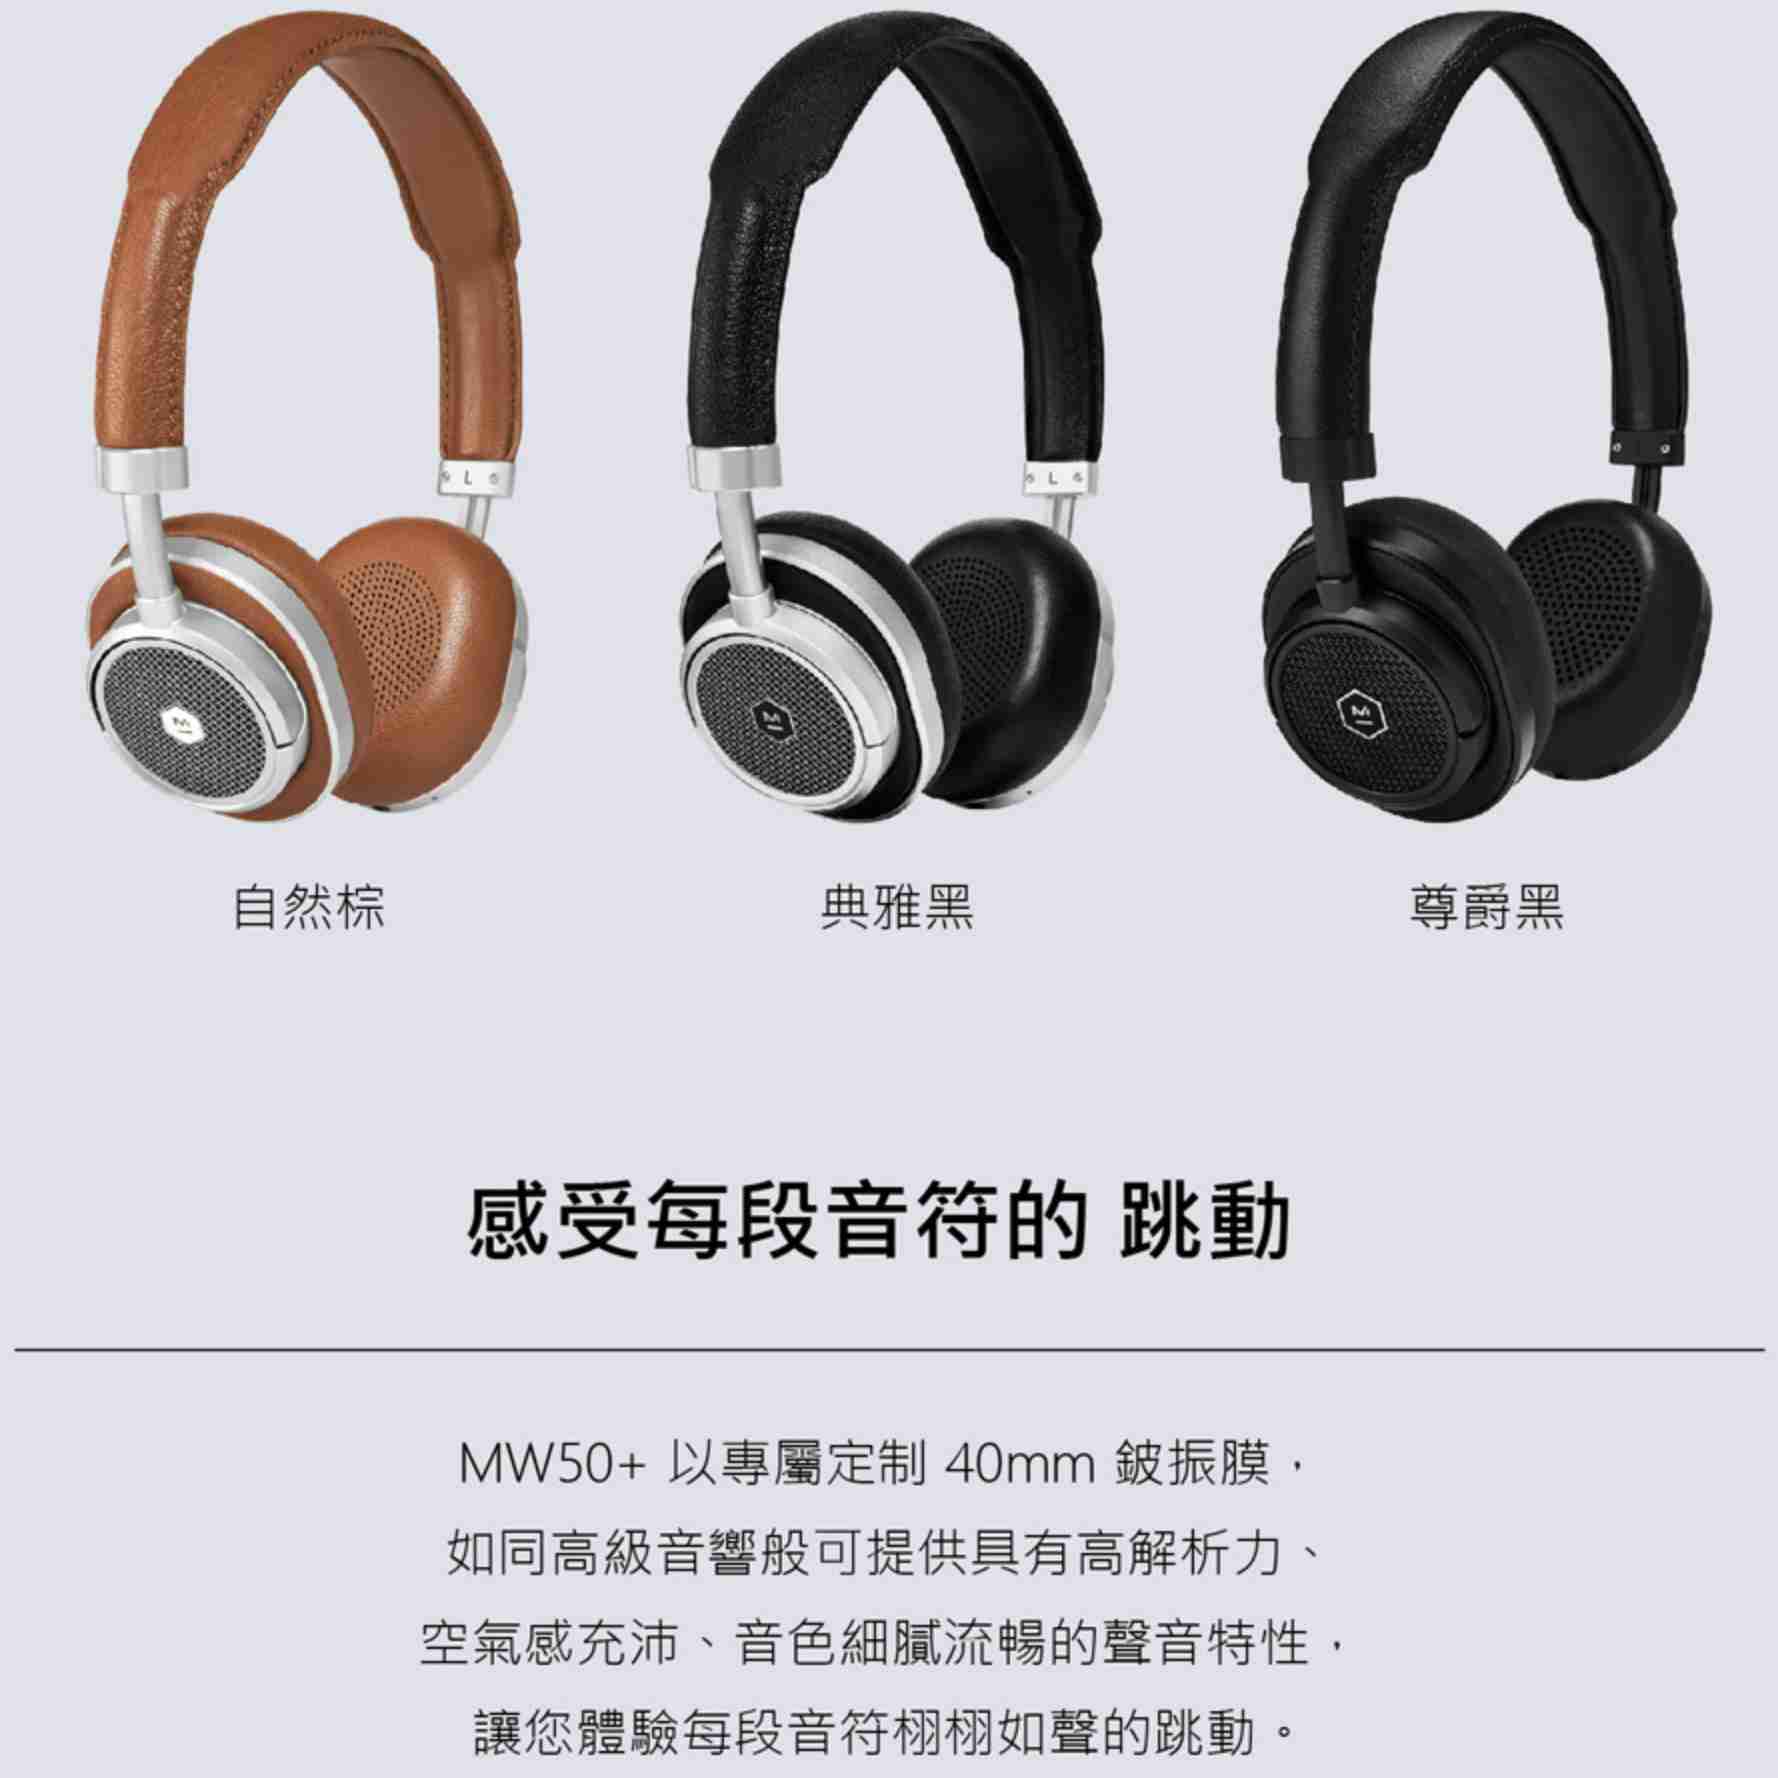 Master&Dynamic MW50+ 經典黑 藍牙 耳罩式 耳機 | 金曲音響